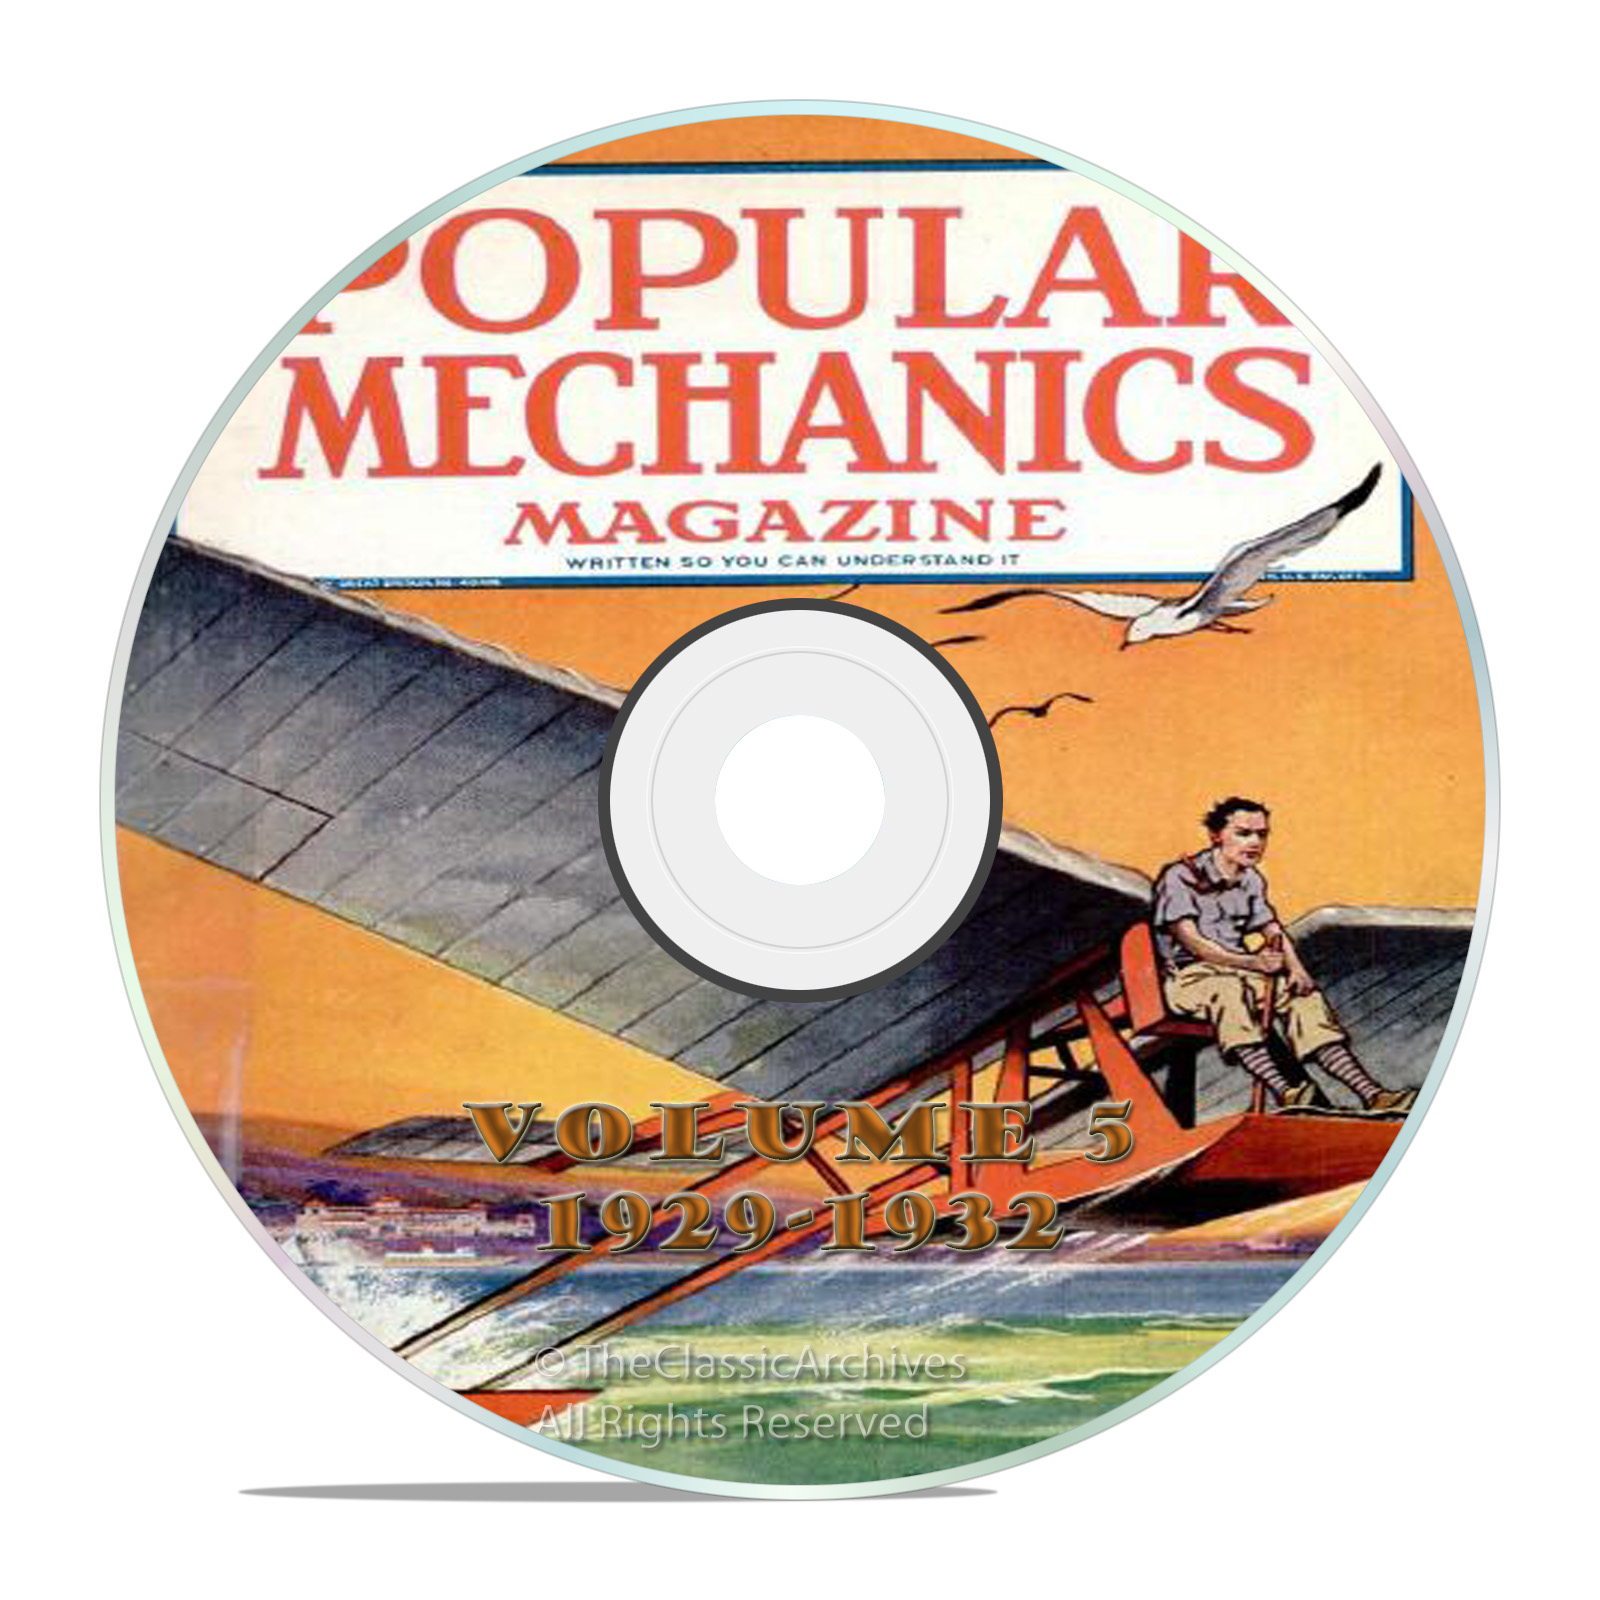 Vintage Popular Mechanics Magazine, Volume 5 DVD, 1929-1932, 37 issues